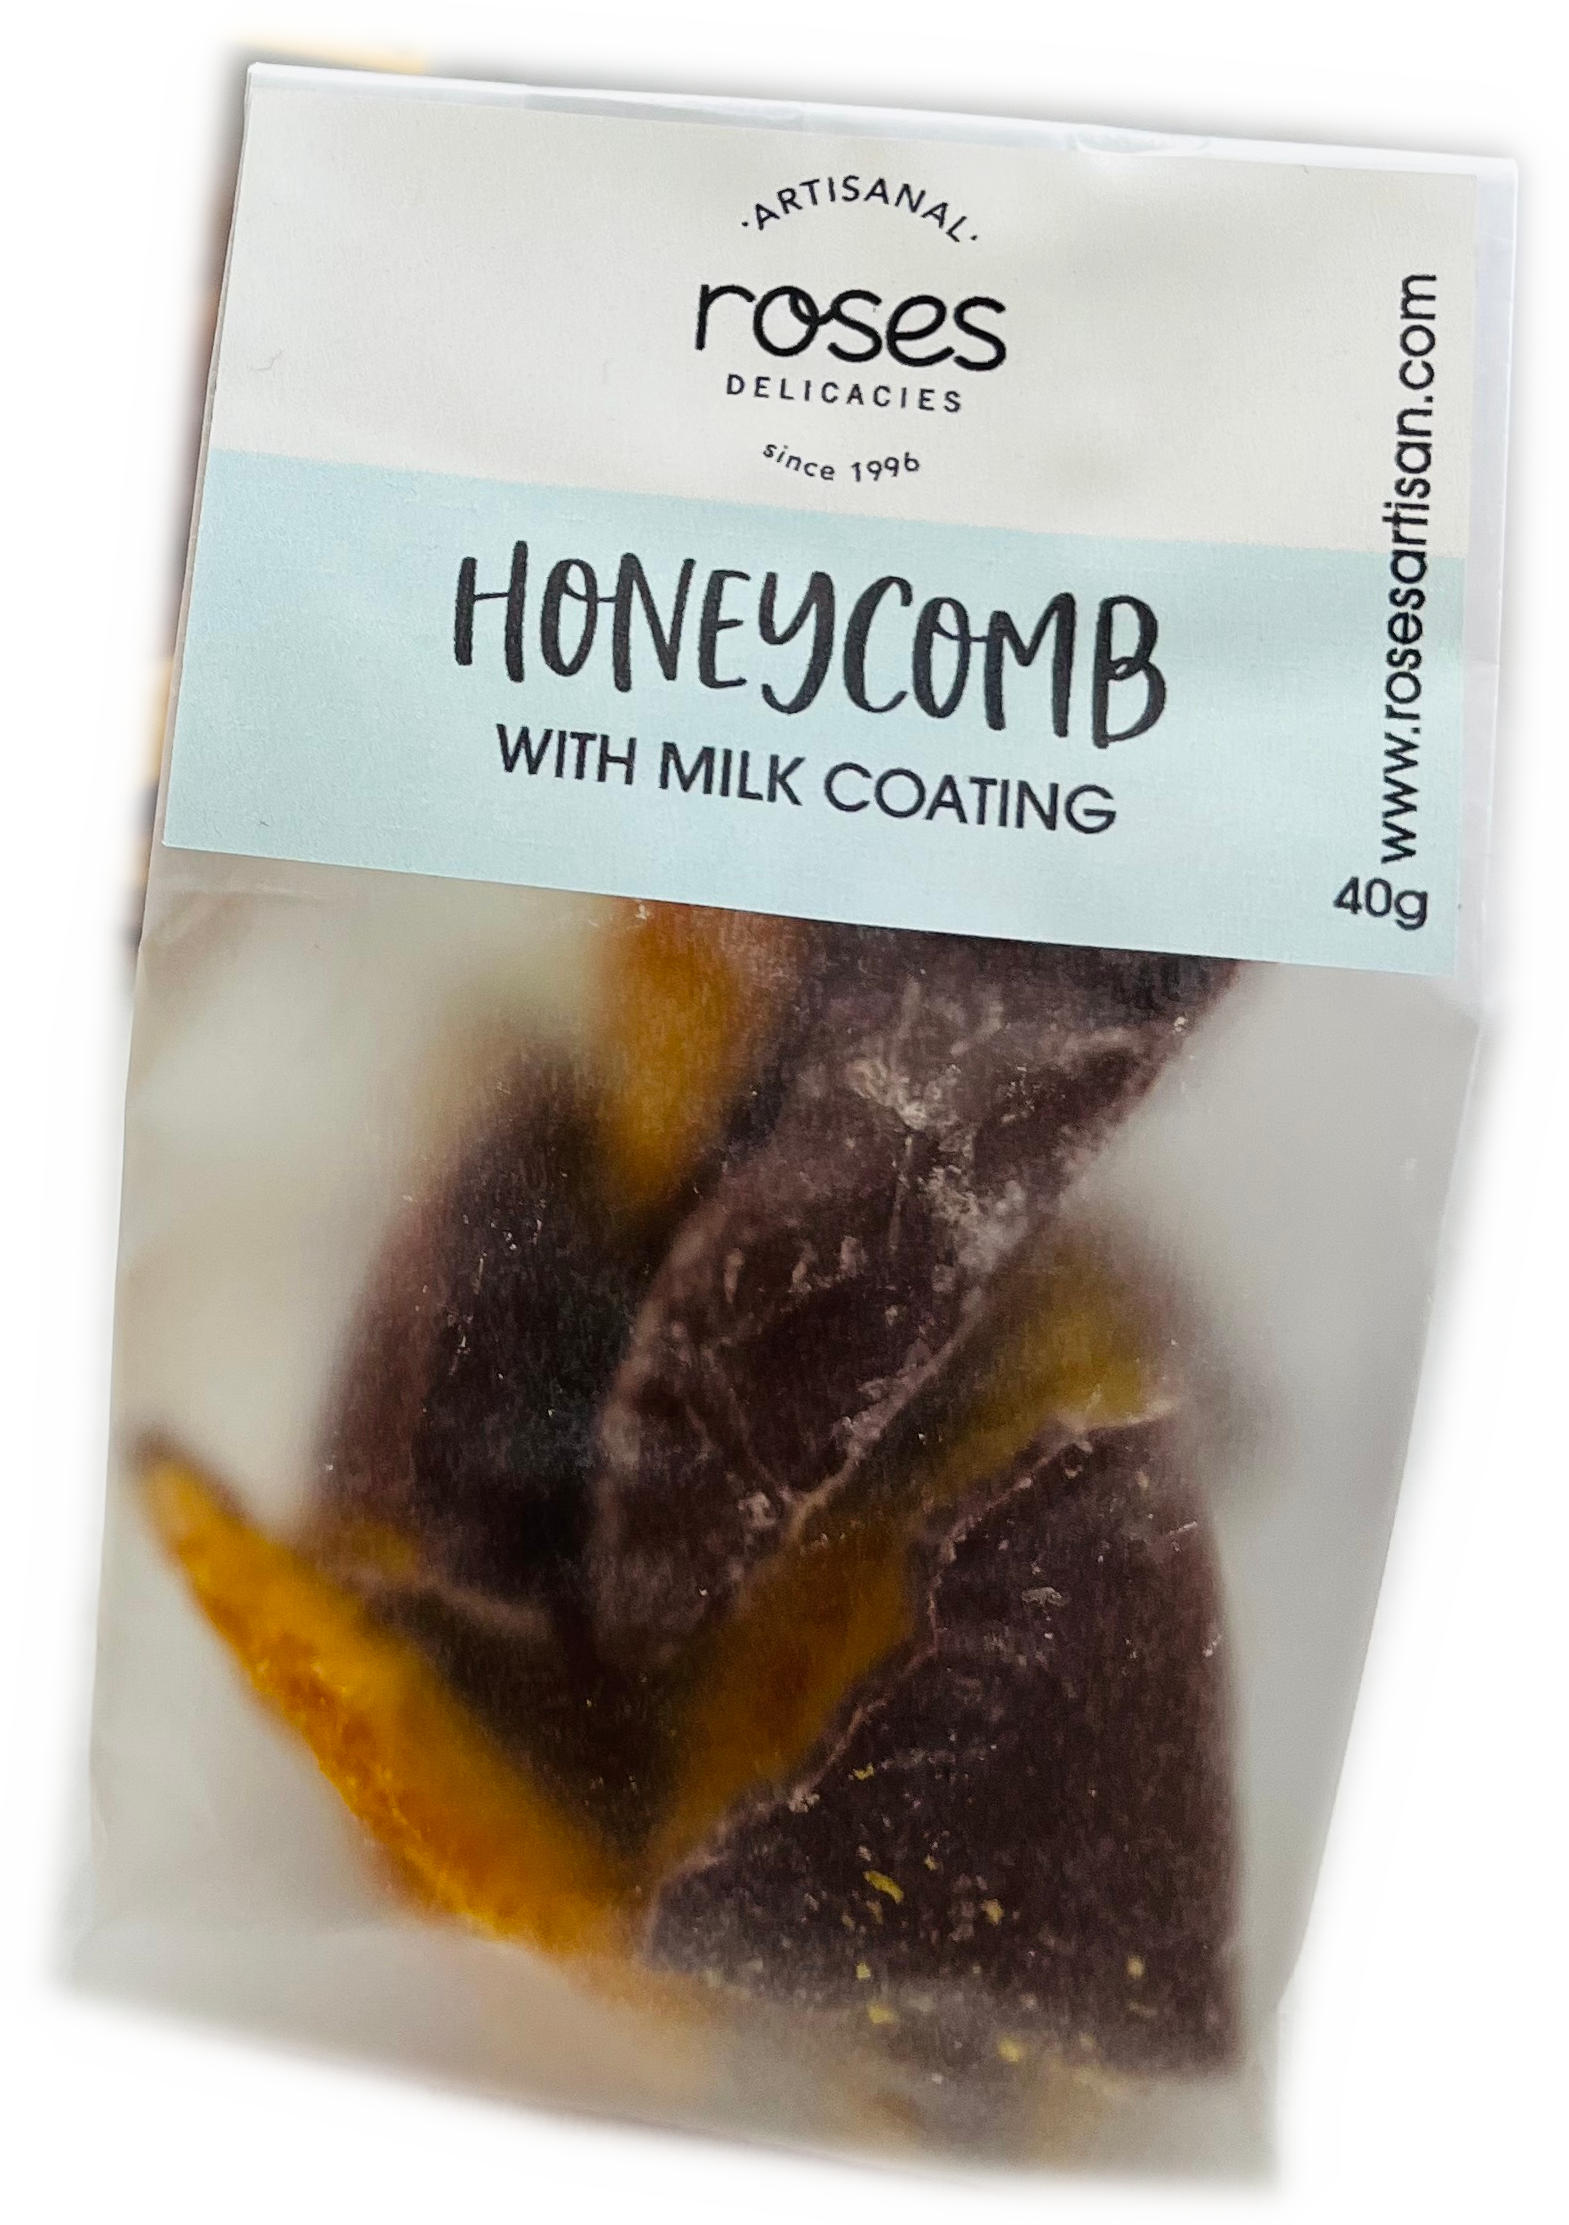 Honeycomb with Milk Coating